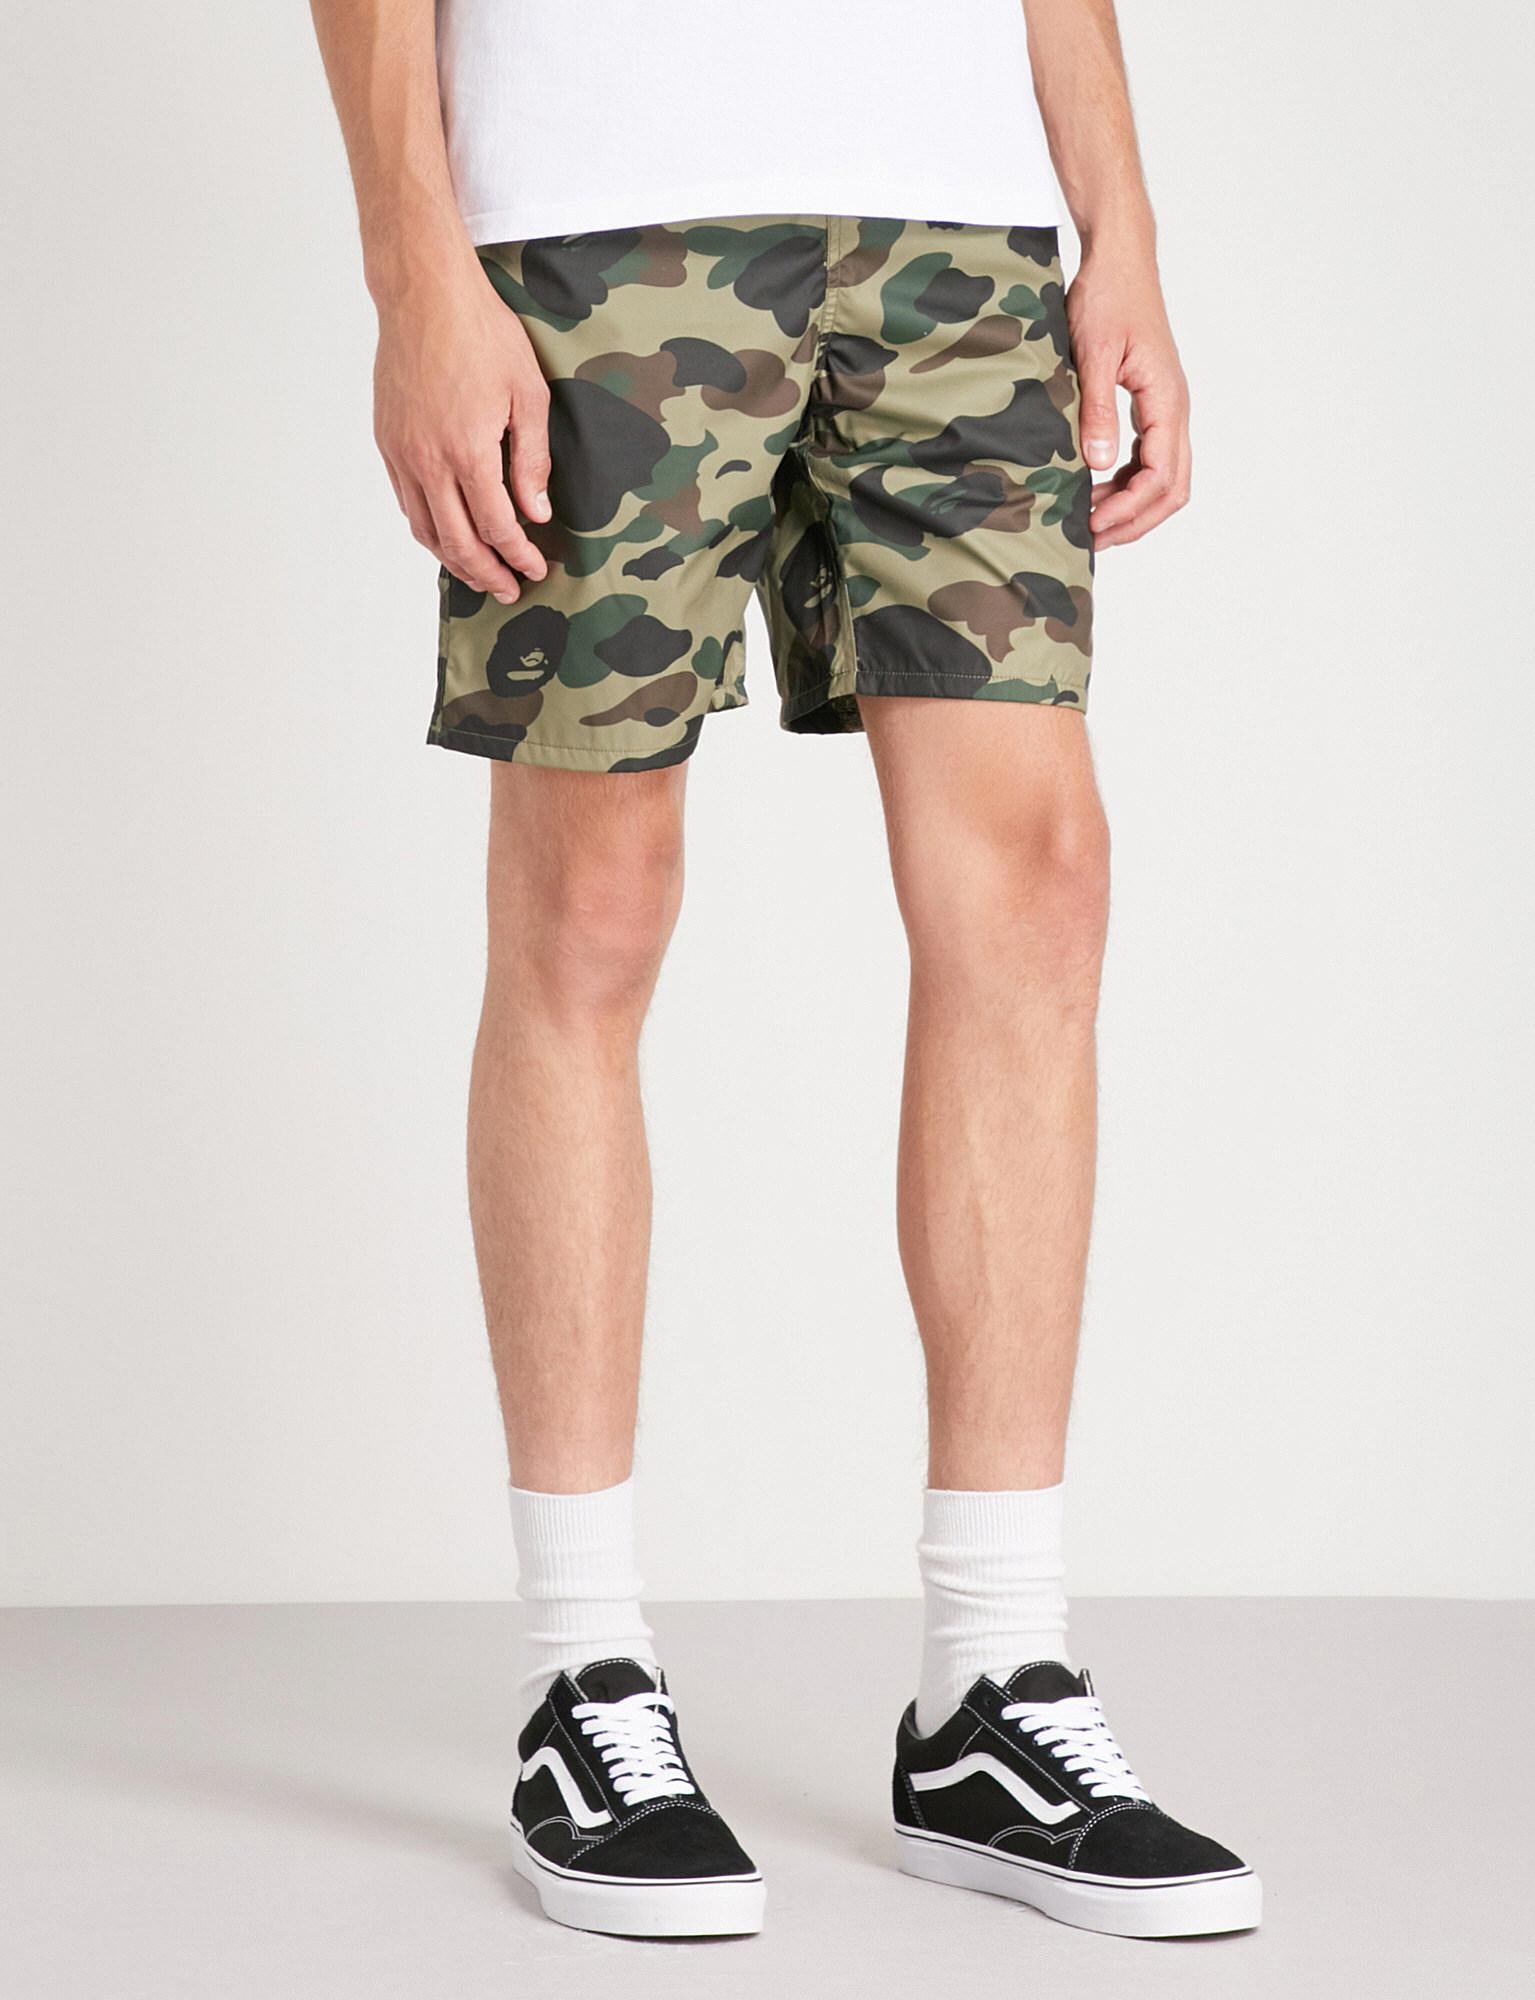 Camo Beach Shorts - XL